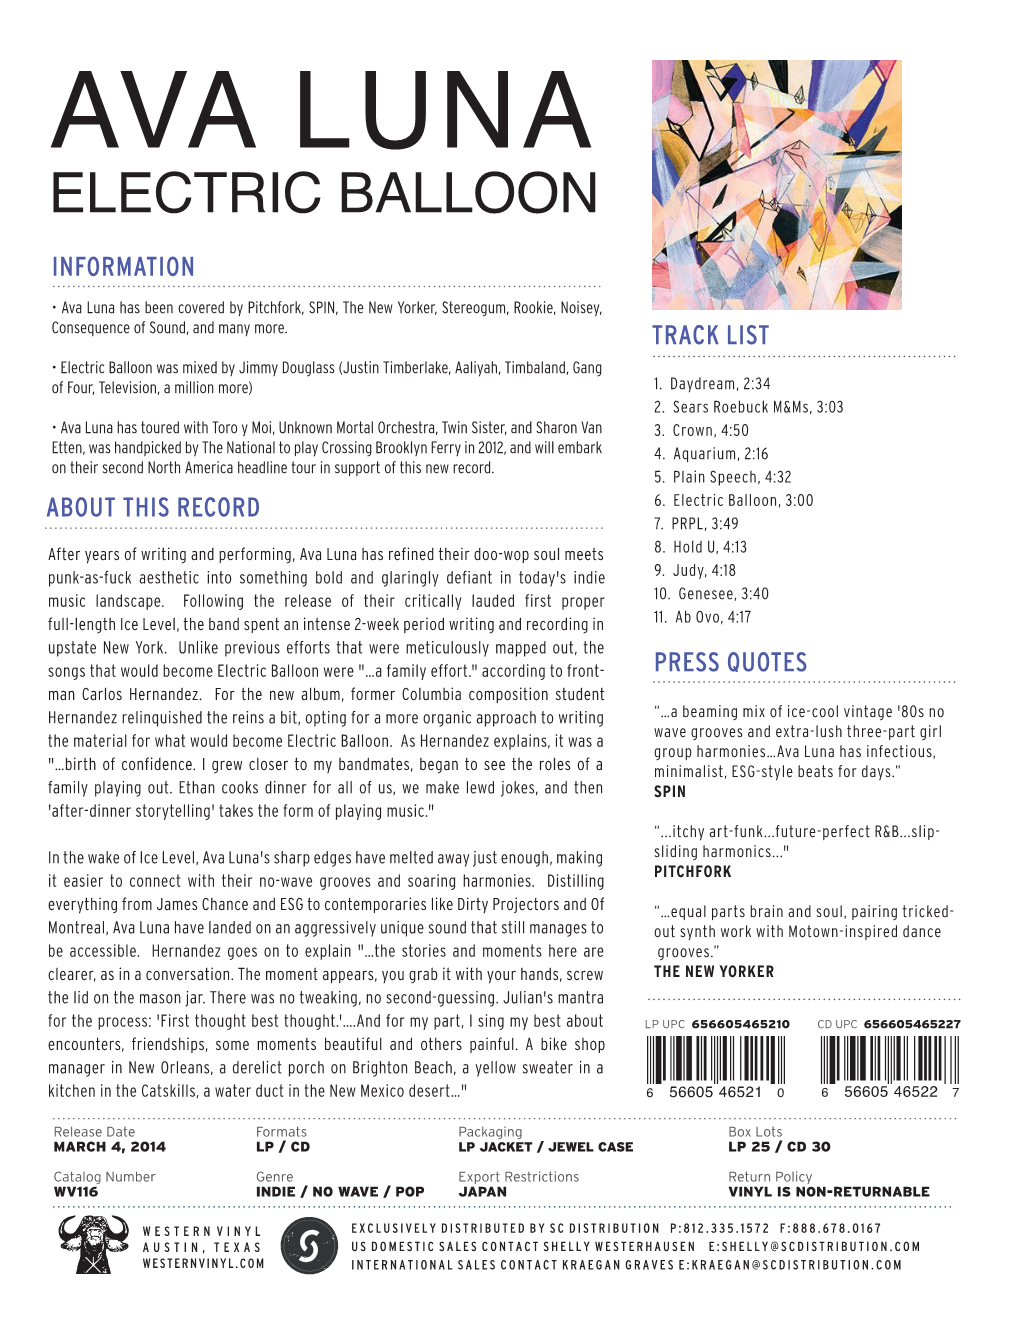 Ava Luna Electric Balloon Information